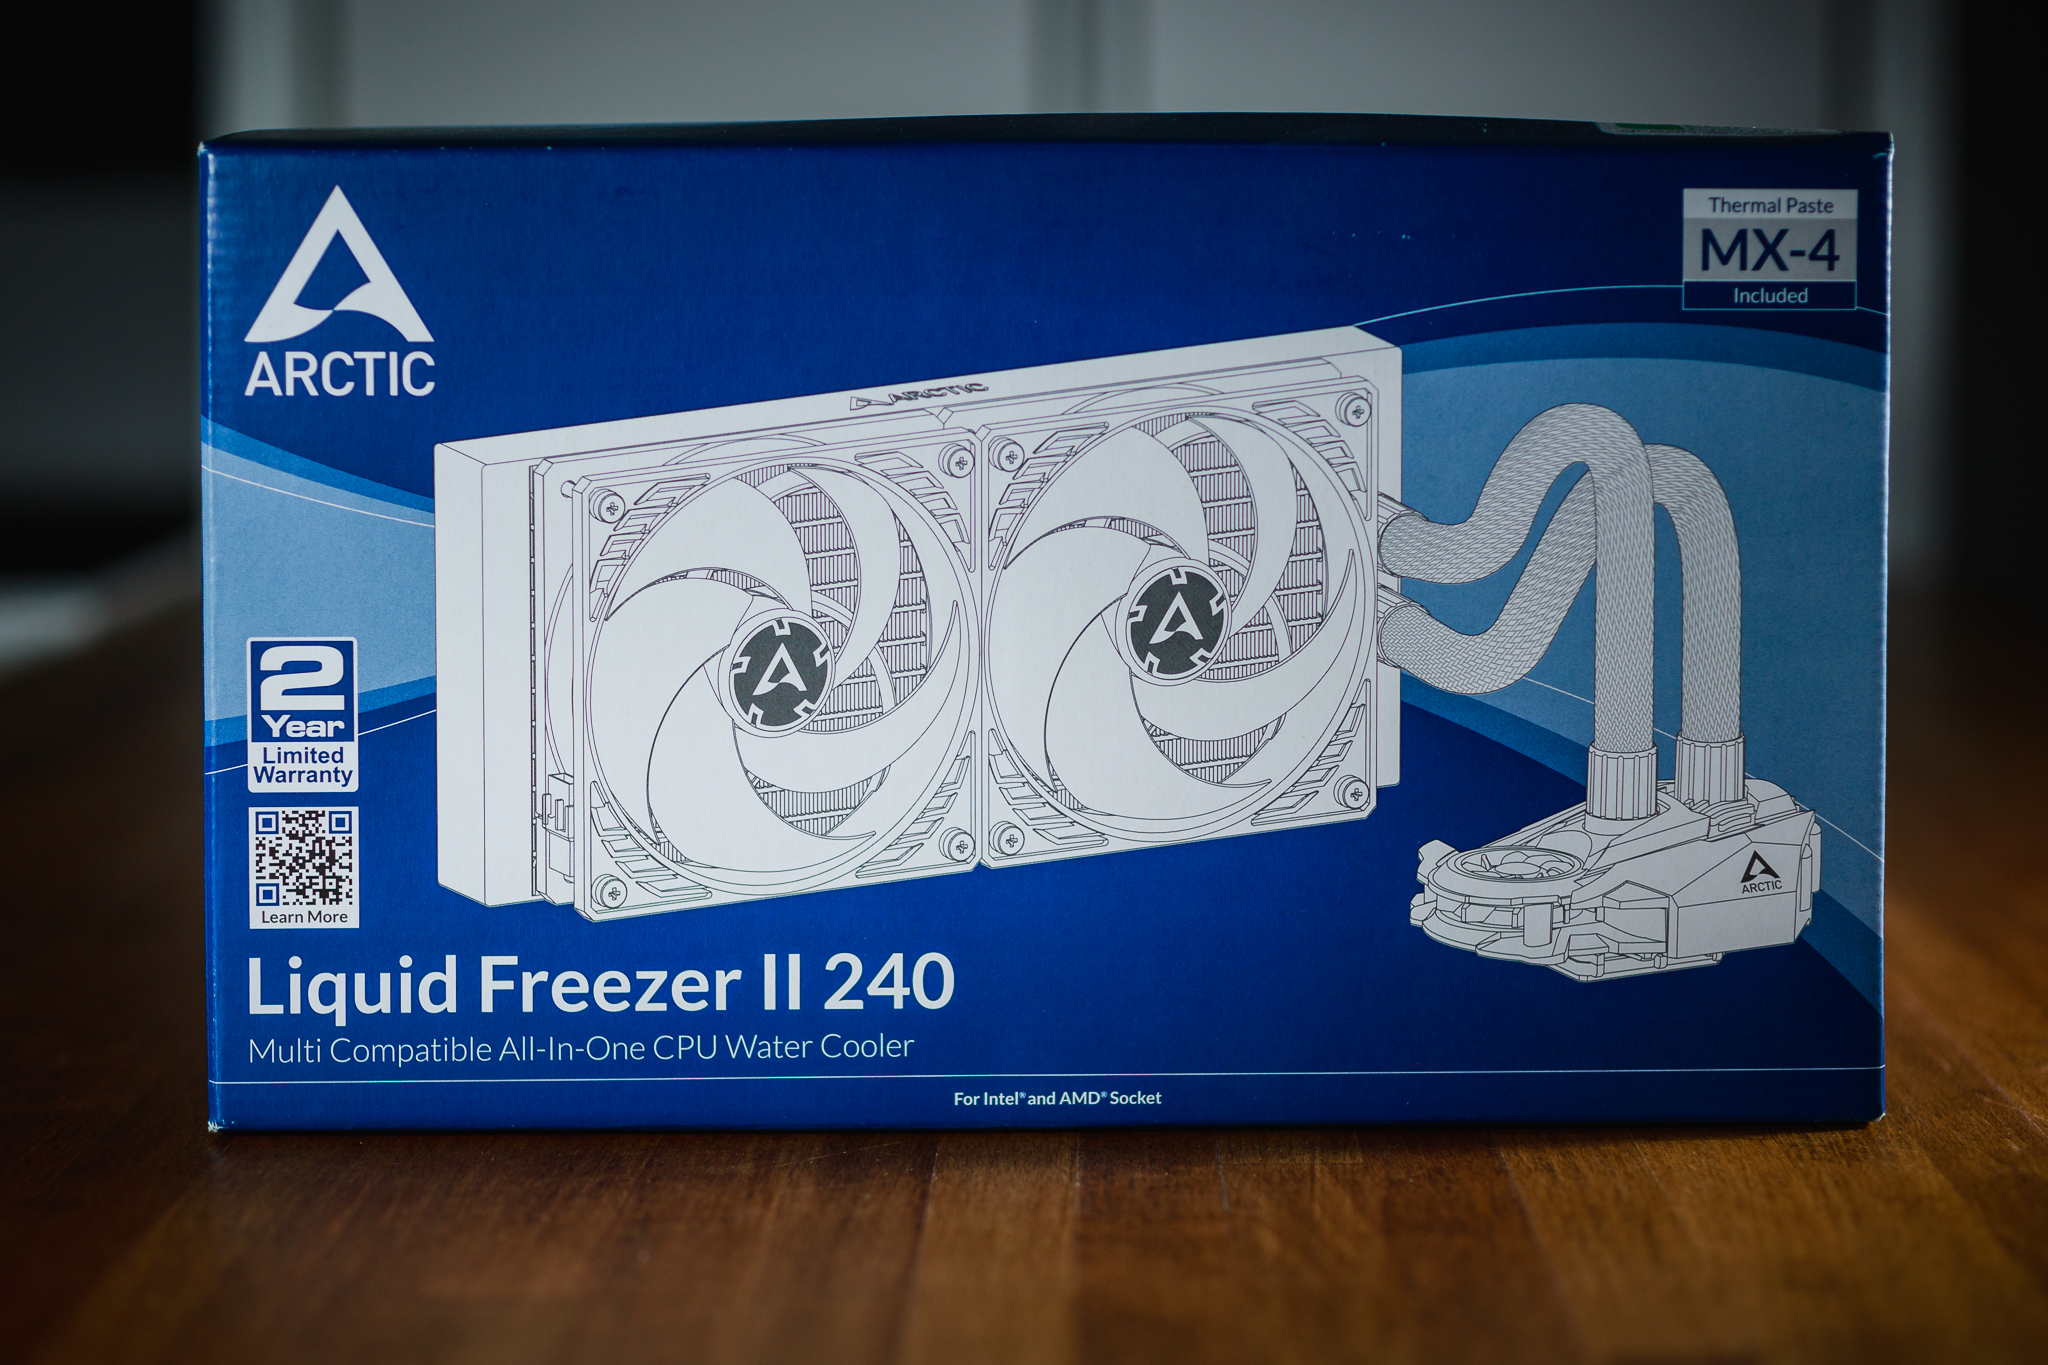 PR, Extended Warranty for all Liquid Freezer II